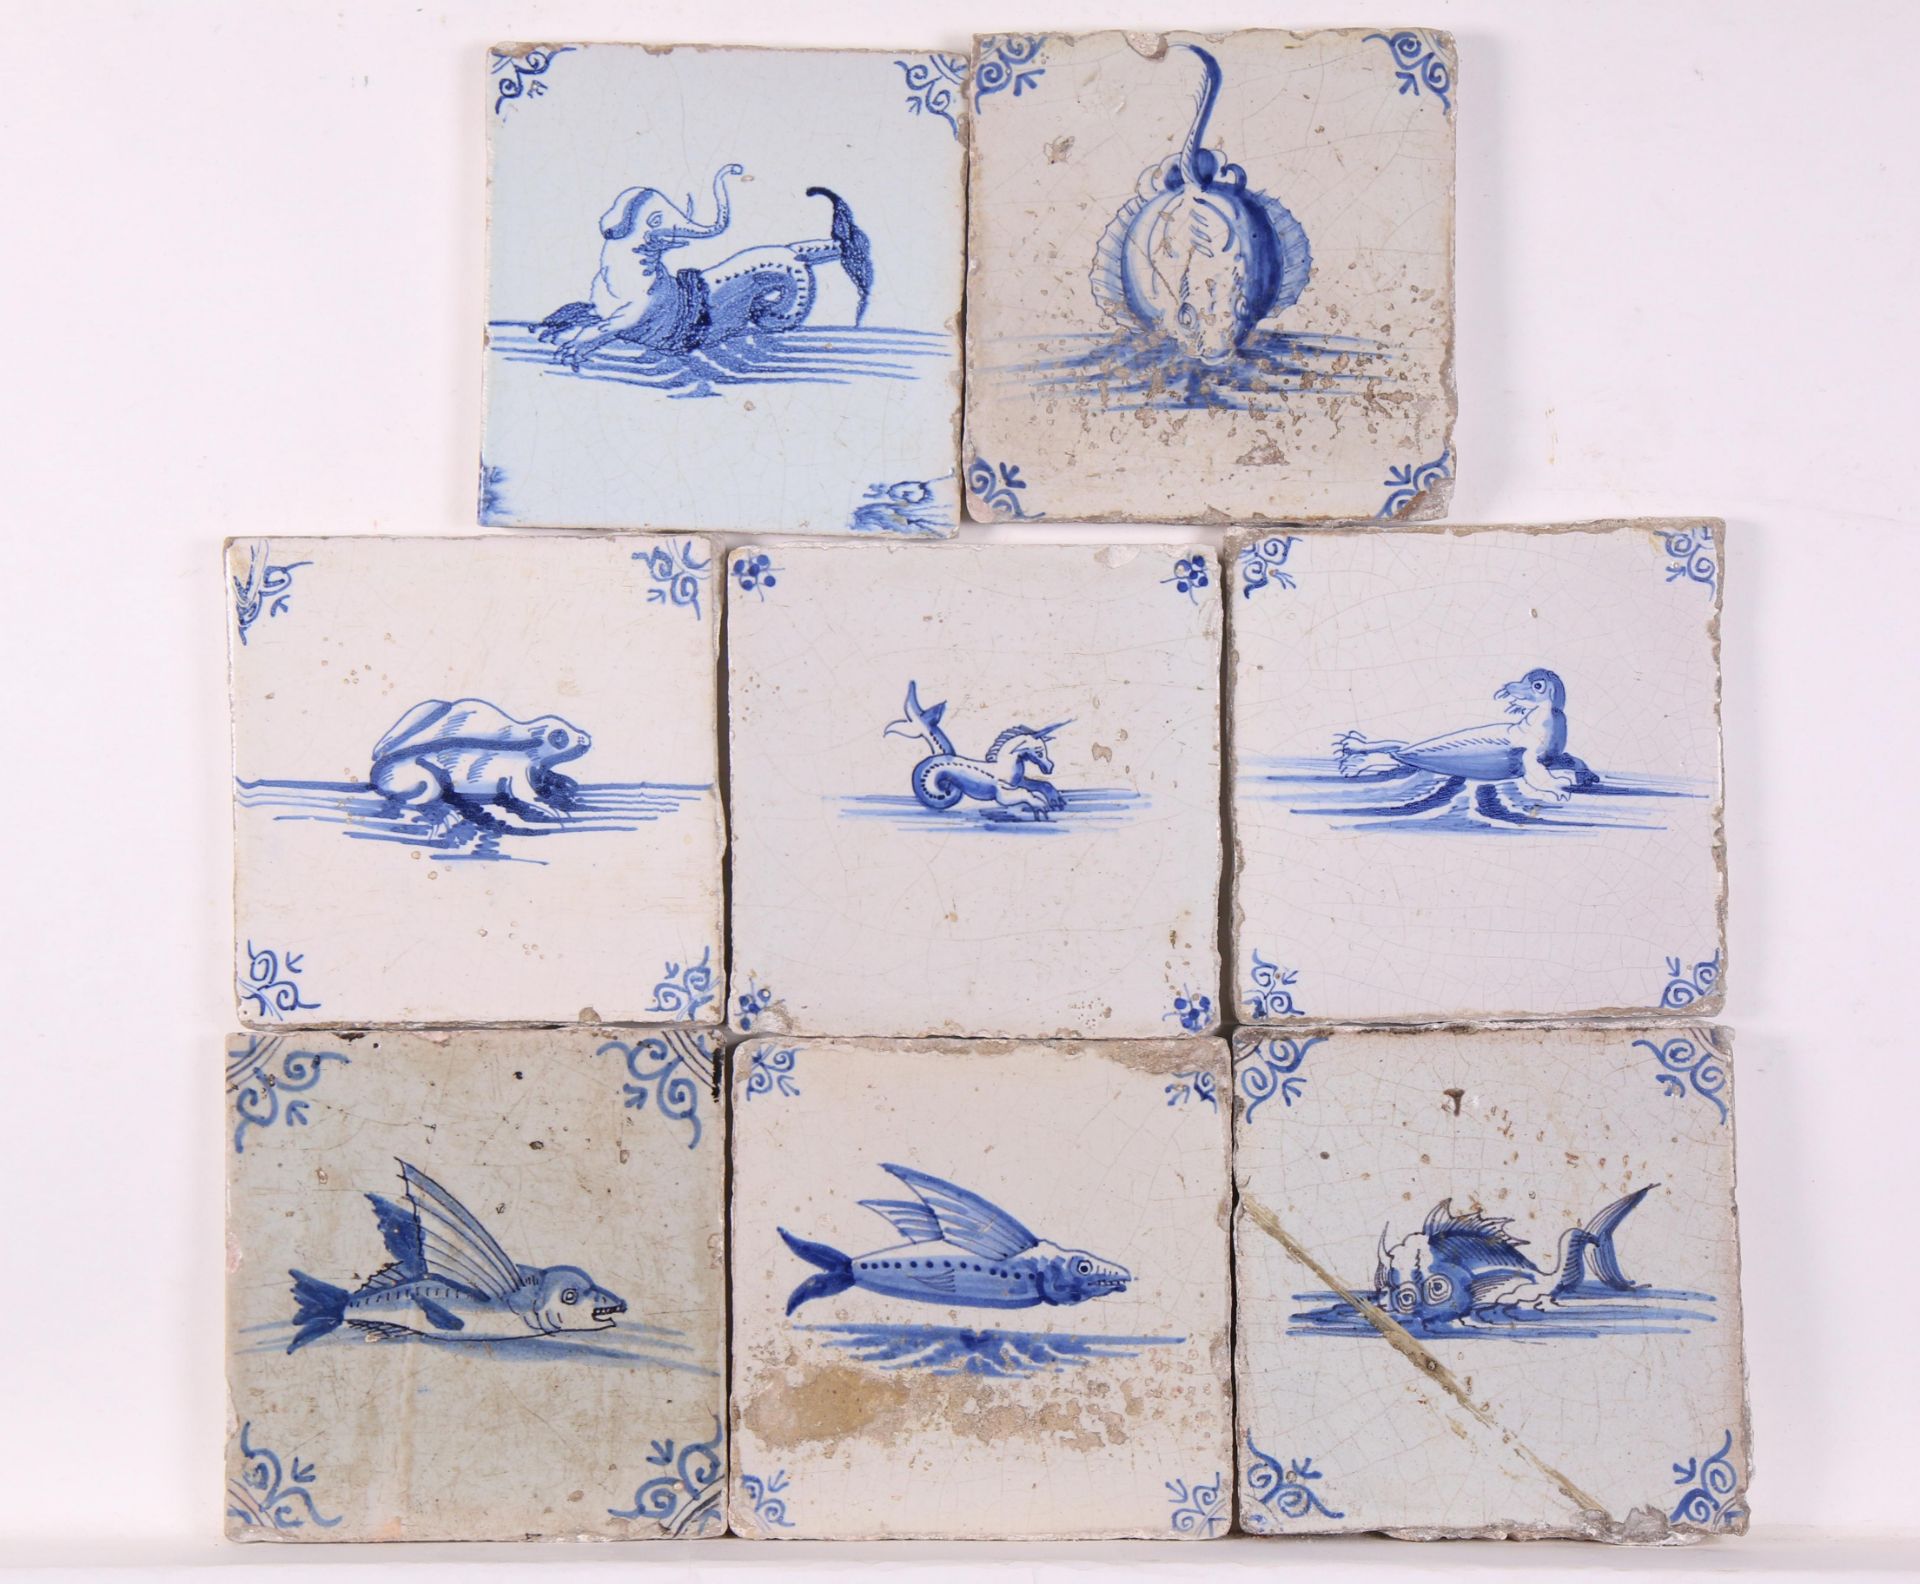 Acht blauw aardewerk dierdecor tegels, 1630-1650,